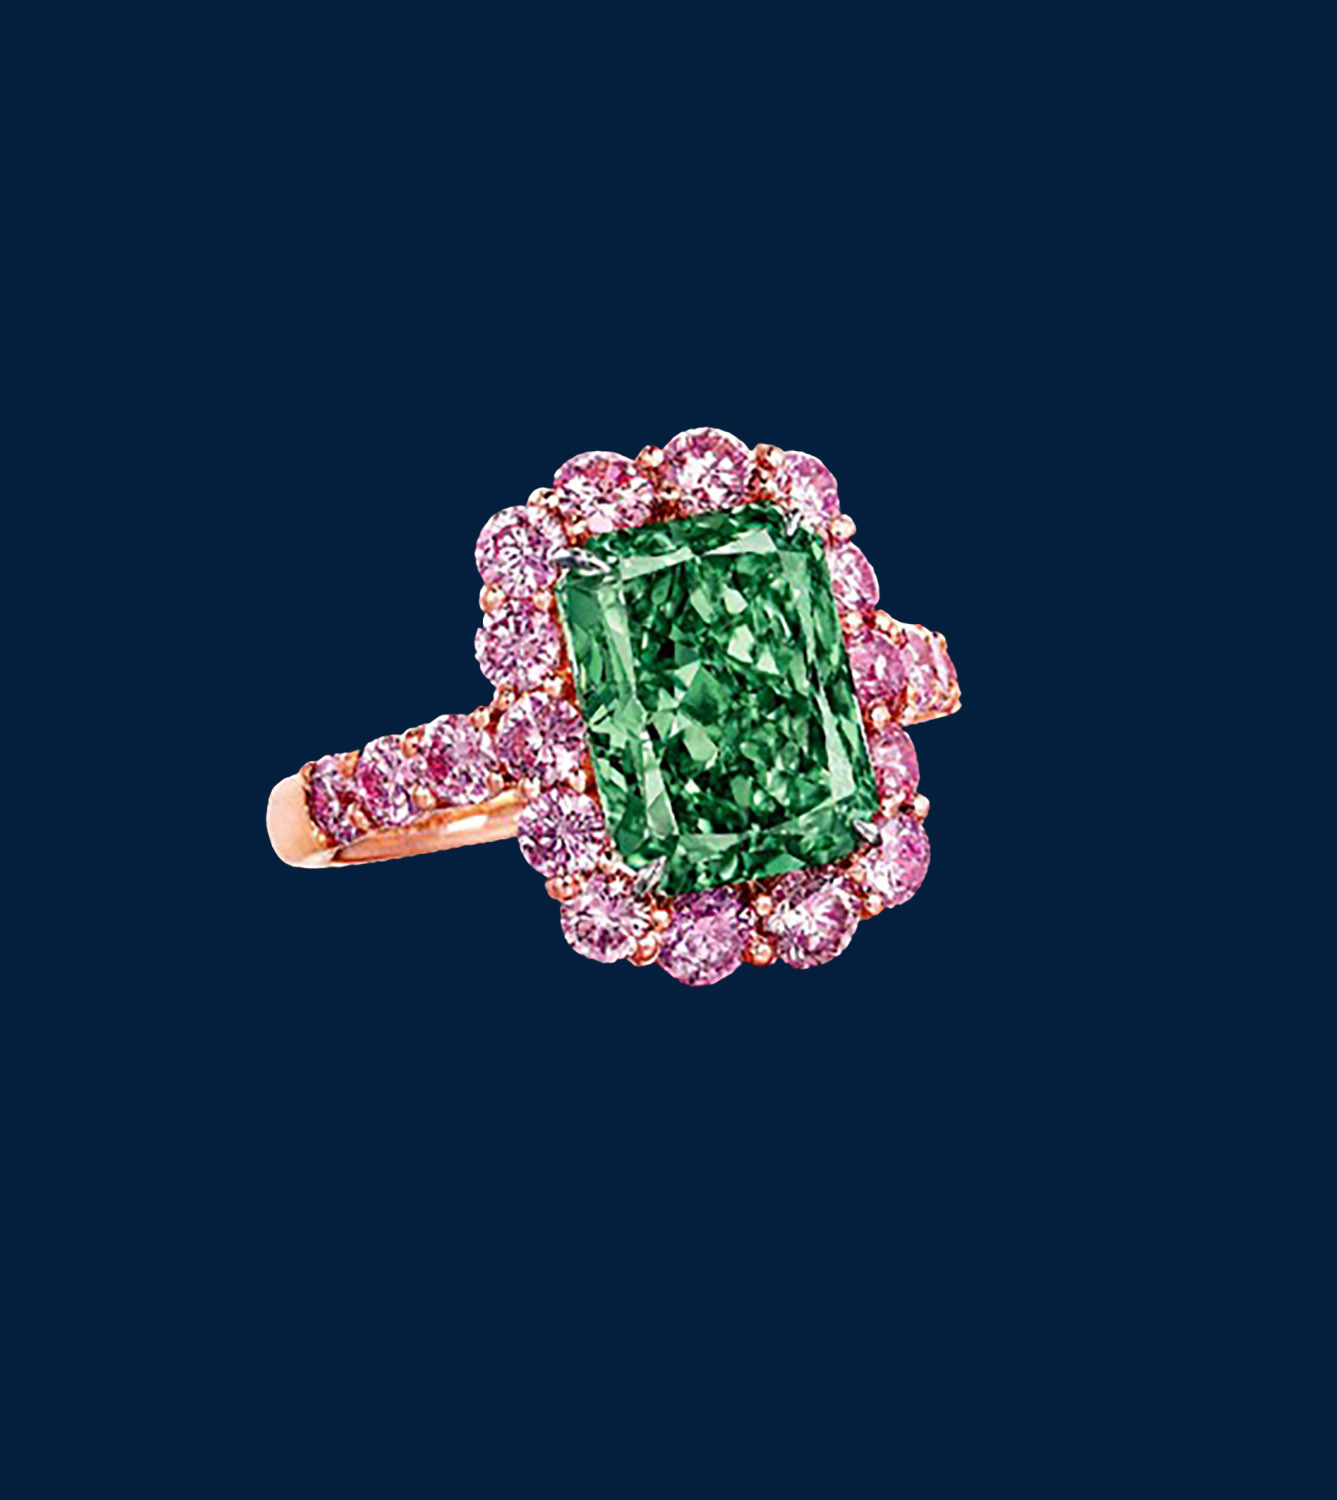 Aurora Green Diamond ring on a blue background. 5.03 Carat Fancy Vivid Green Center diamond surrounded by pink diamonds.